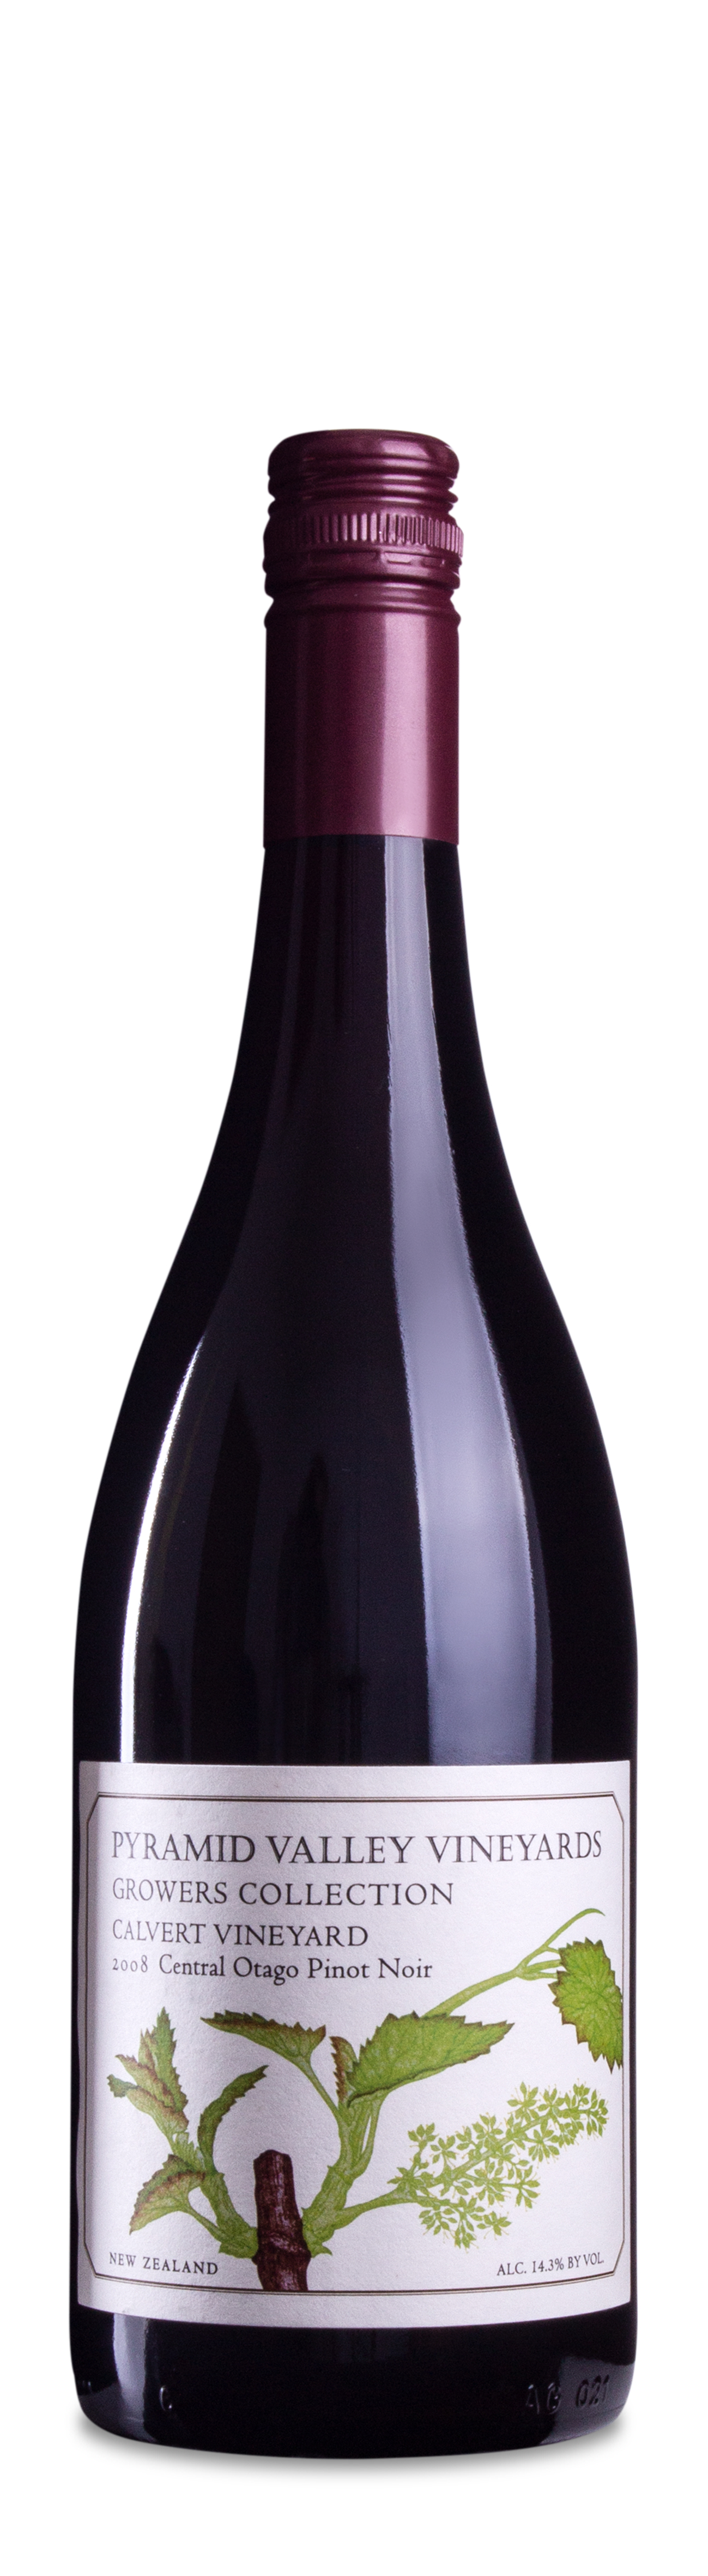 2008 Pyramid Valley Vineyard Calvert Vineyard Pinot Noir